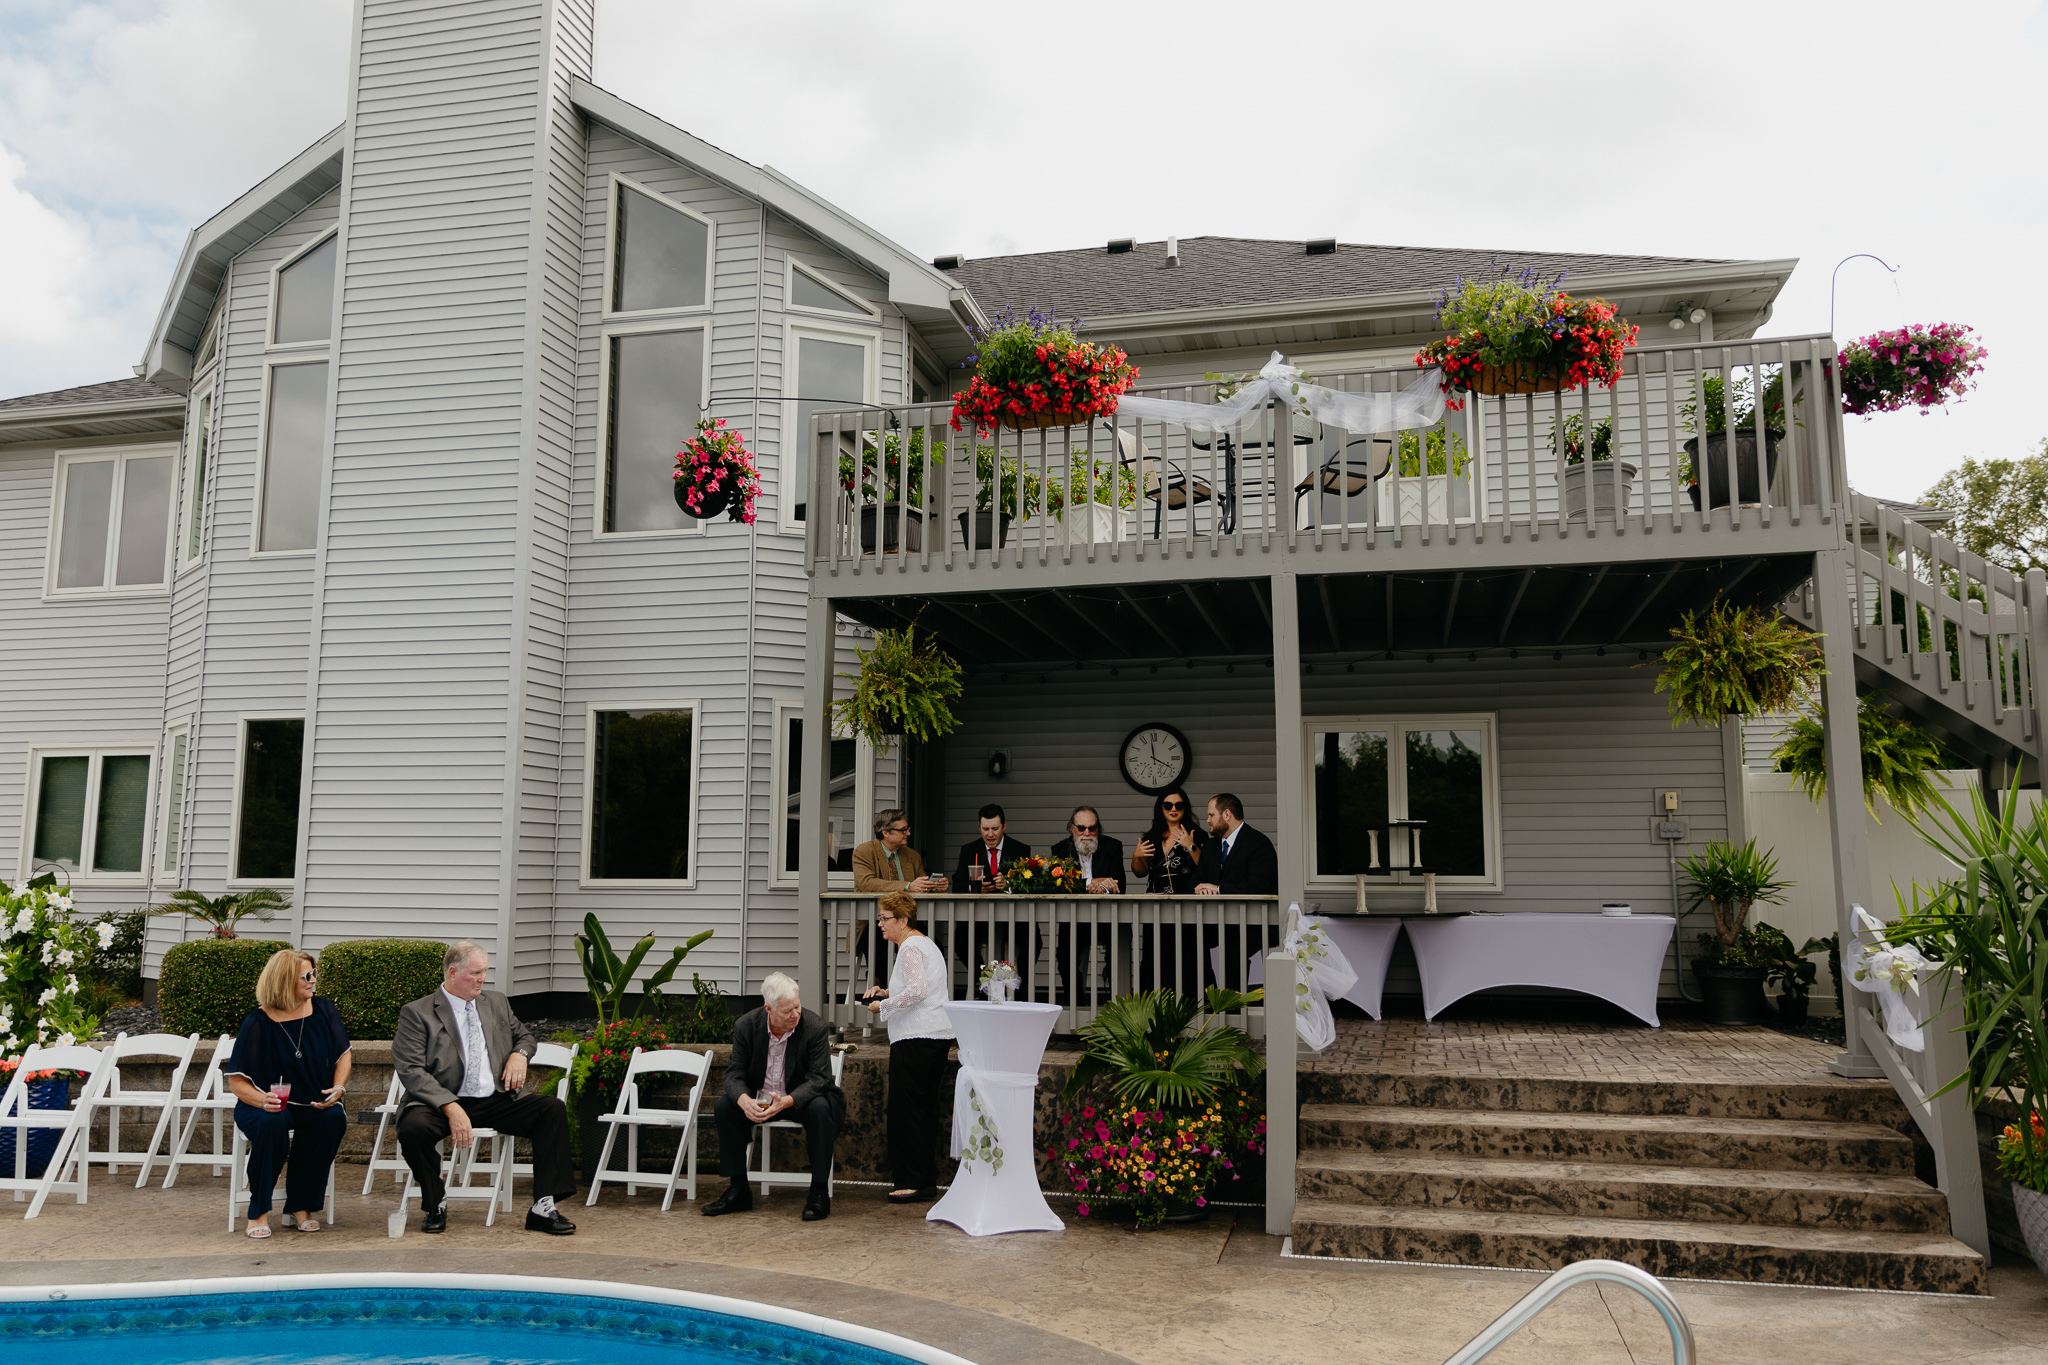 Fort Wayne backyard wedding || Getting ready before the ceremony